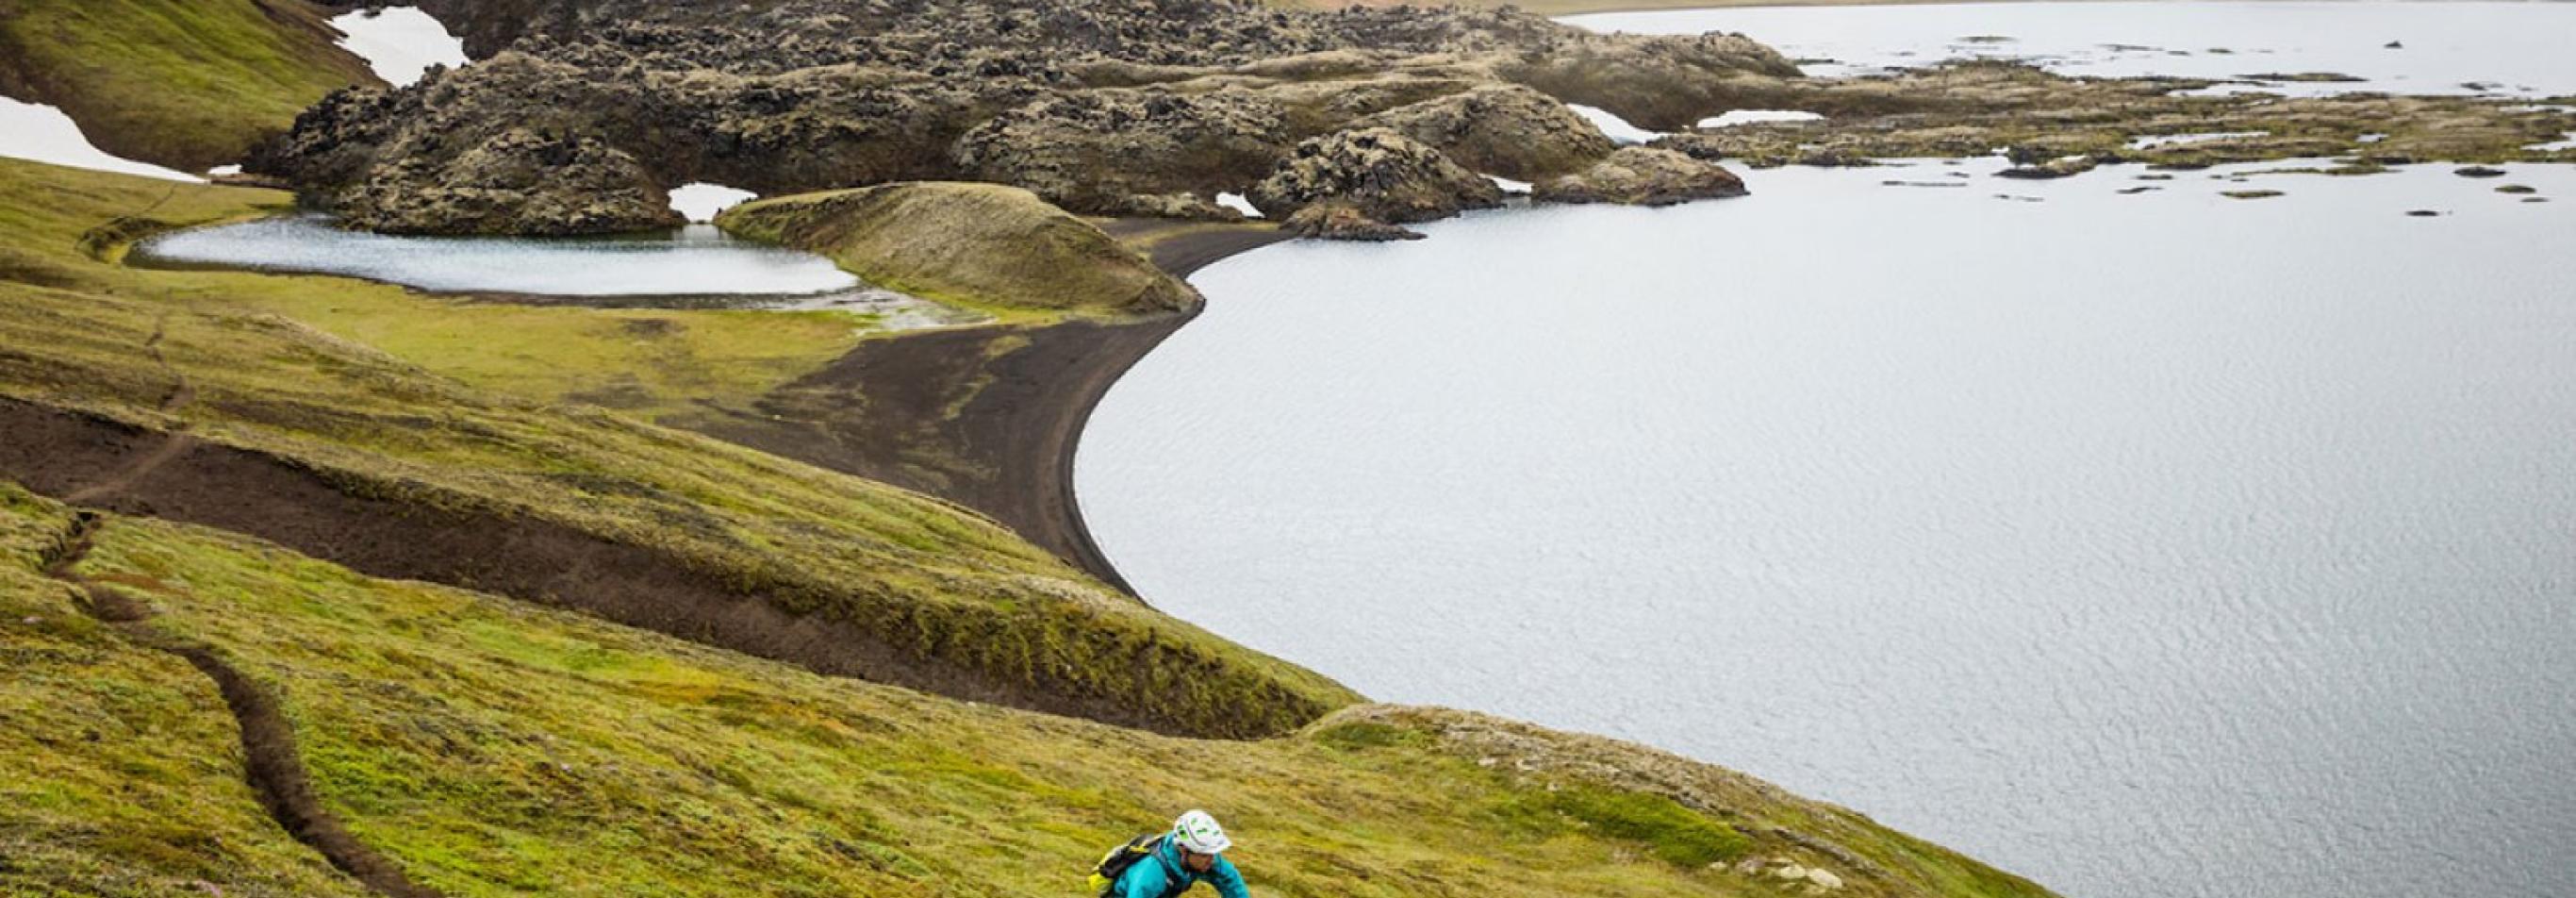 Viaggio in Islanda - In mountain bike sugli altopiani islandesi 